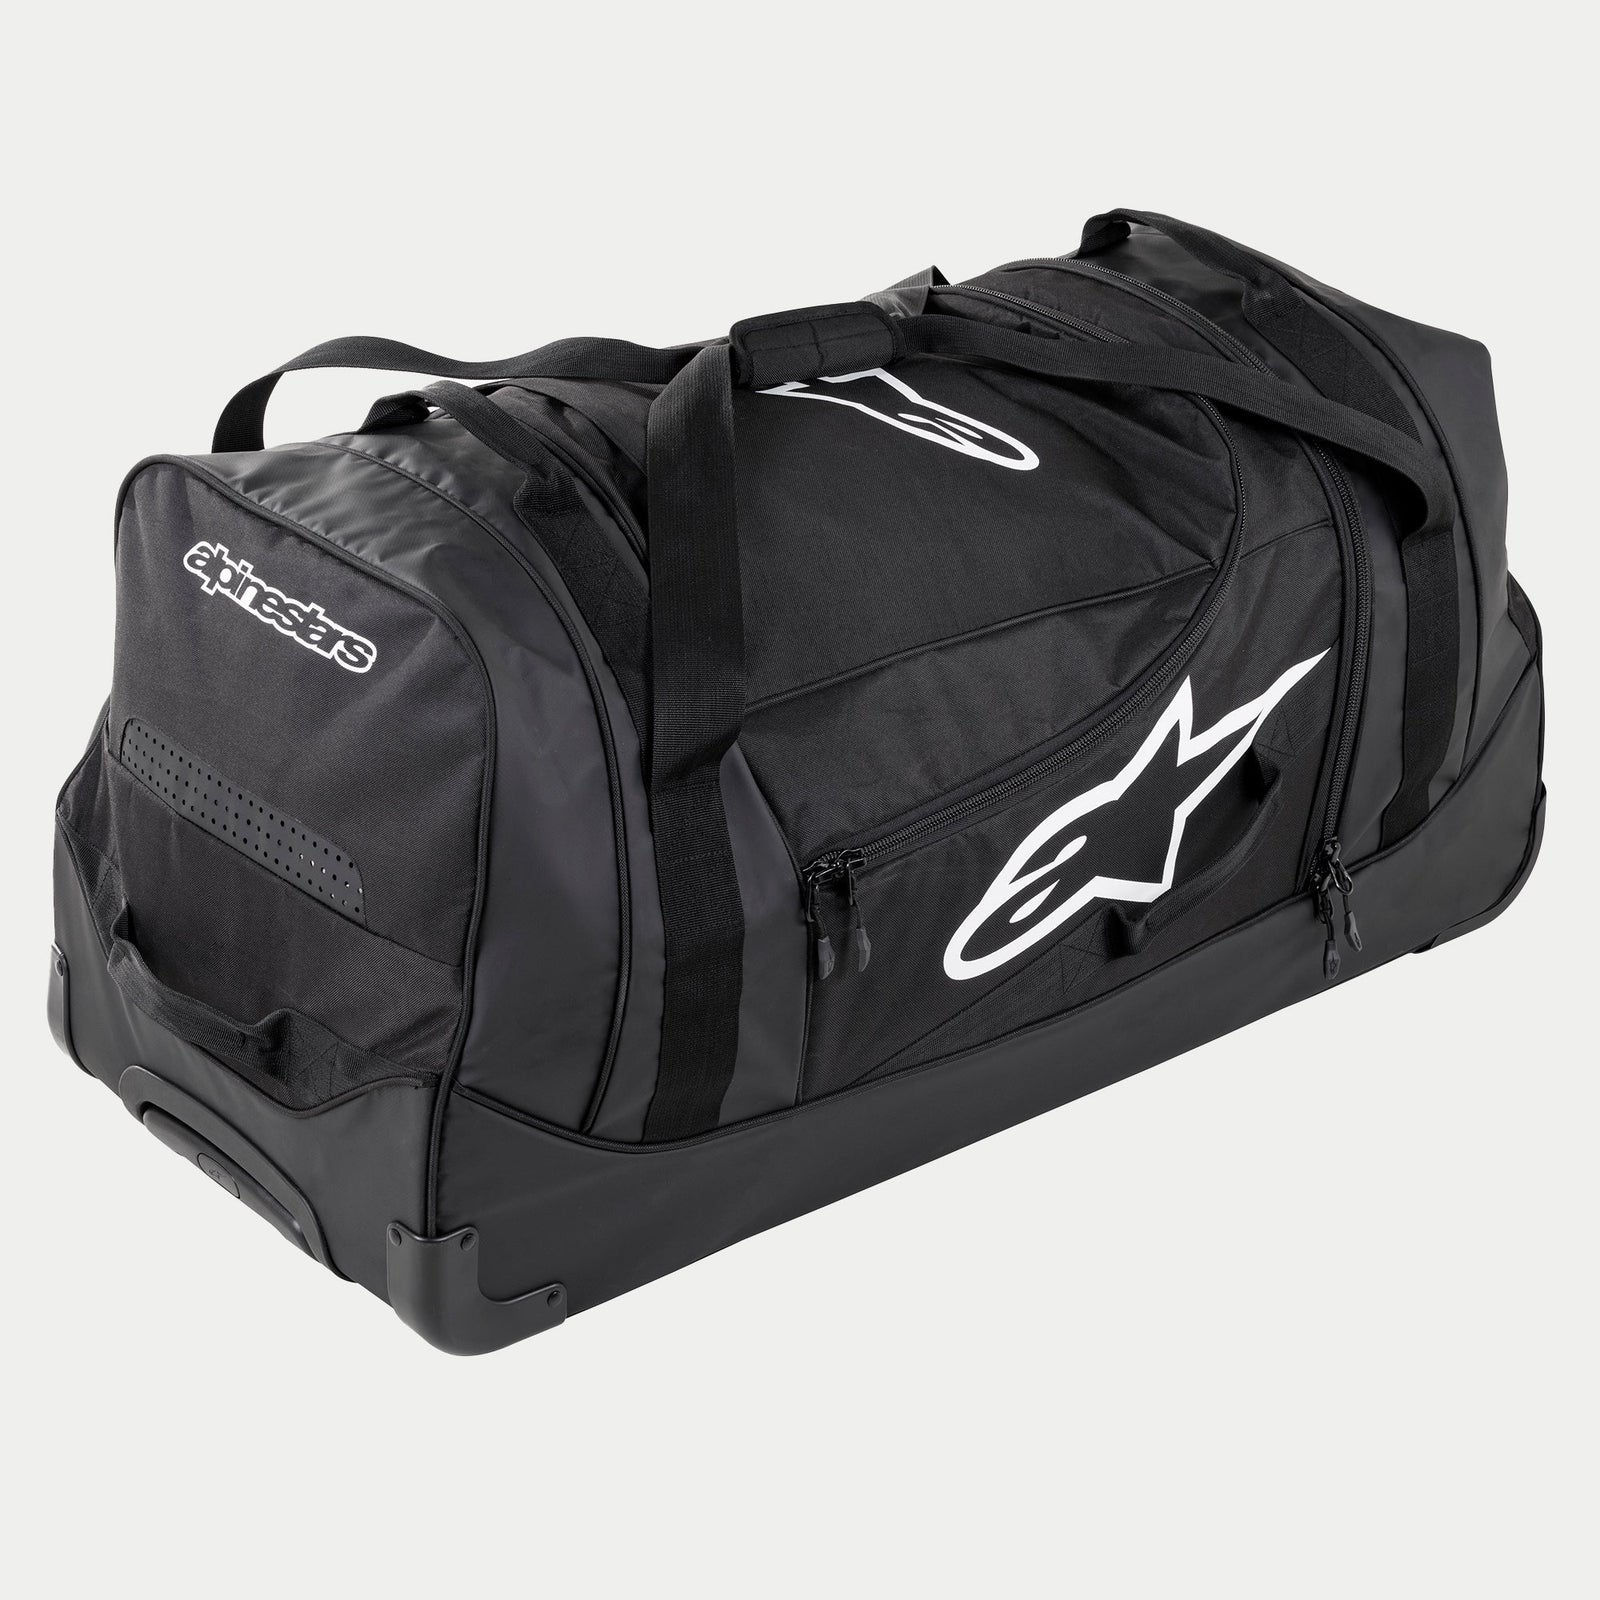 Komodo Travel Bag